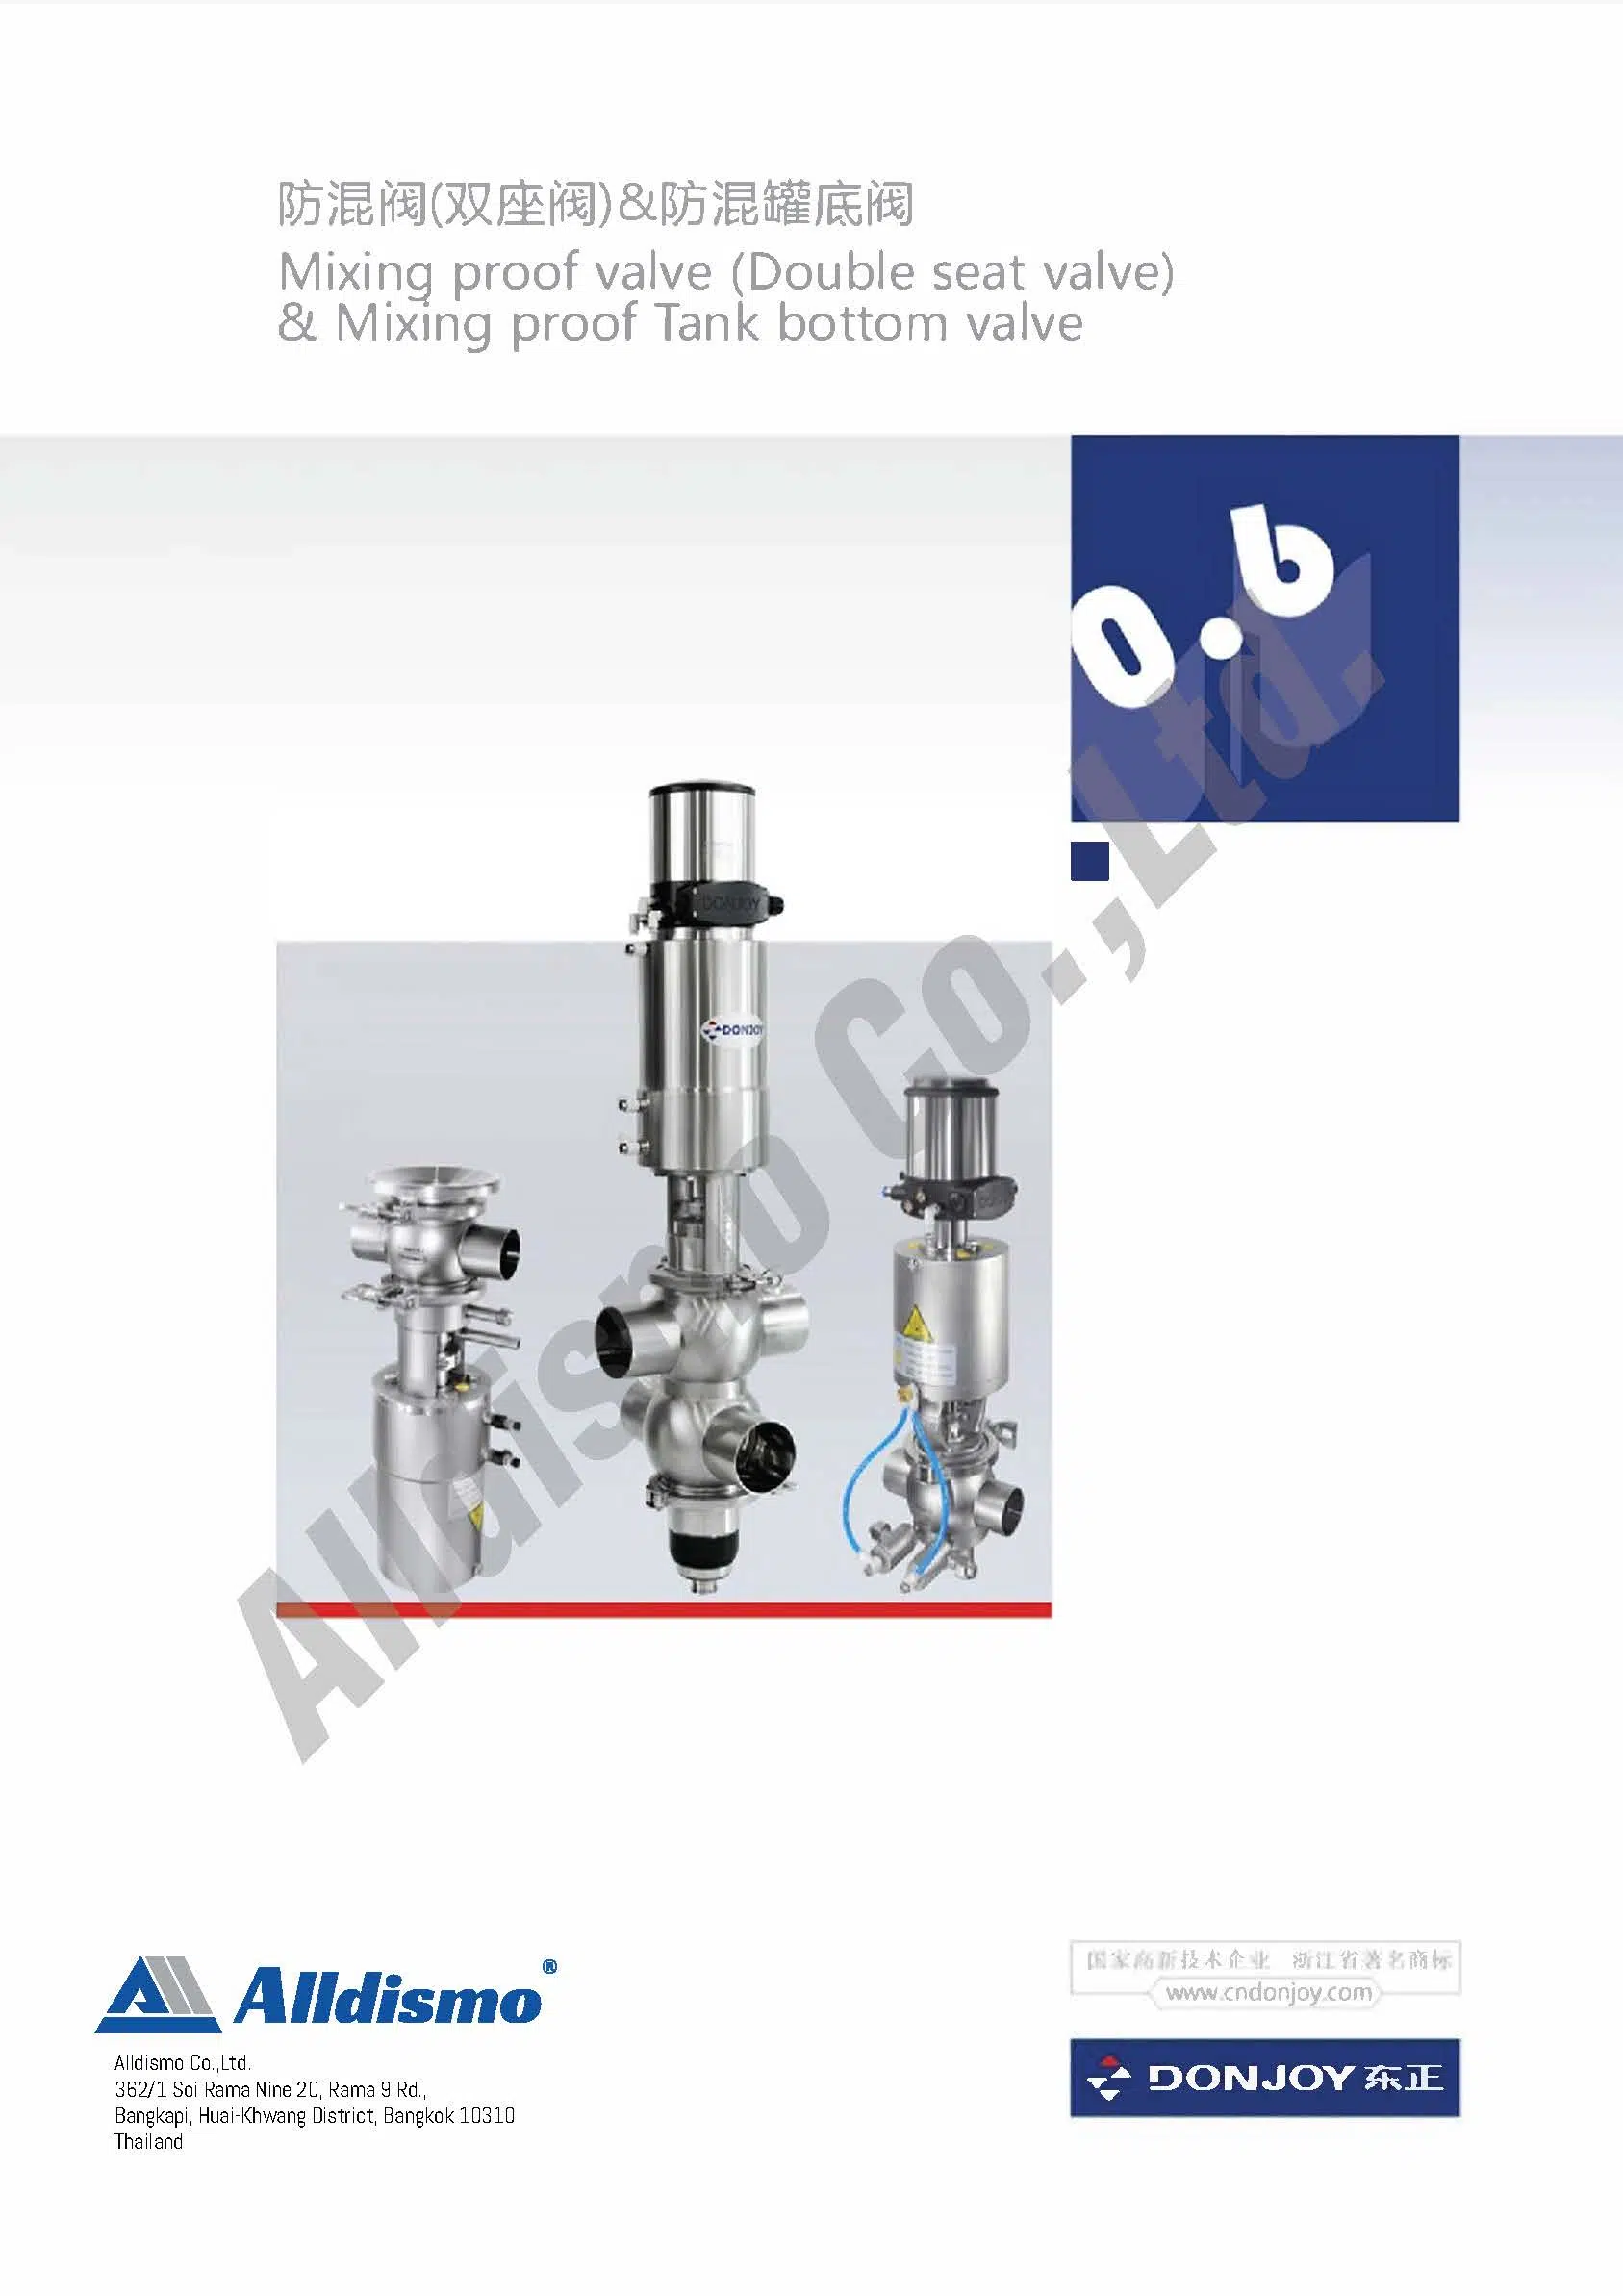 donjoy 06-1 mixproof valve (double seat valve) - alldismo co.,ltd.